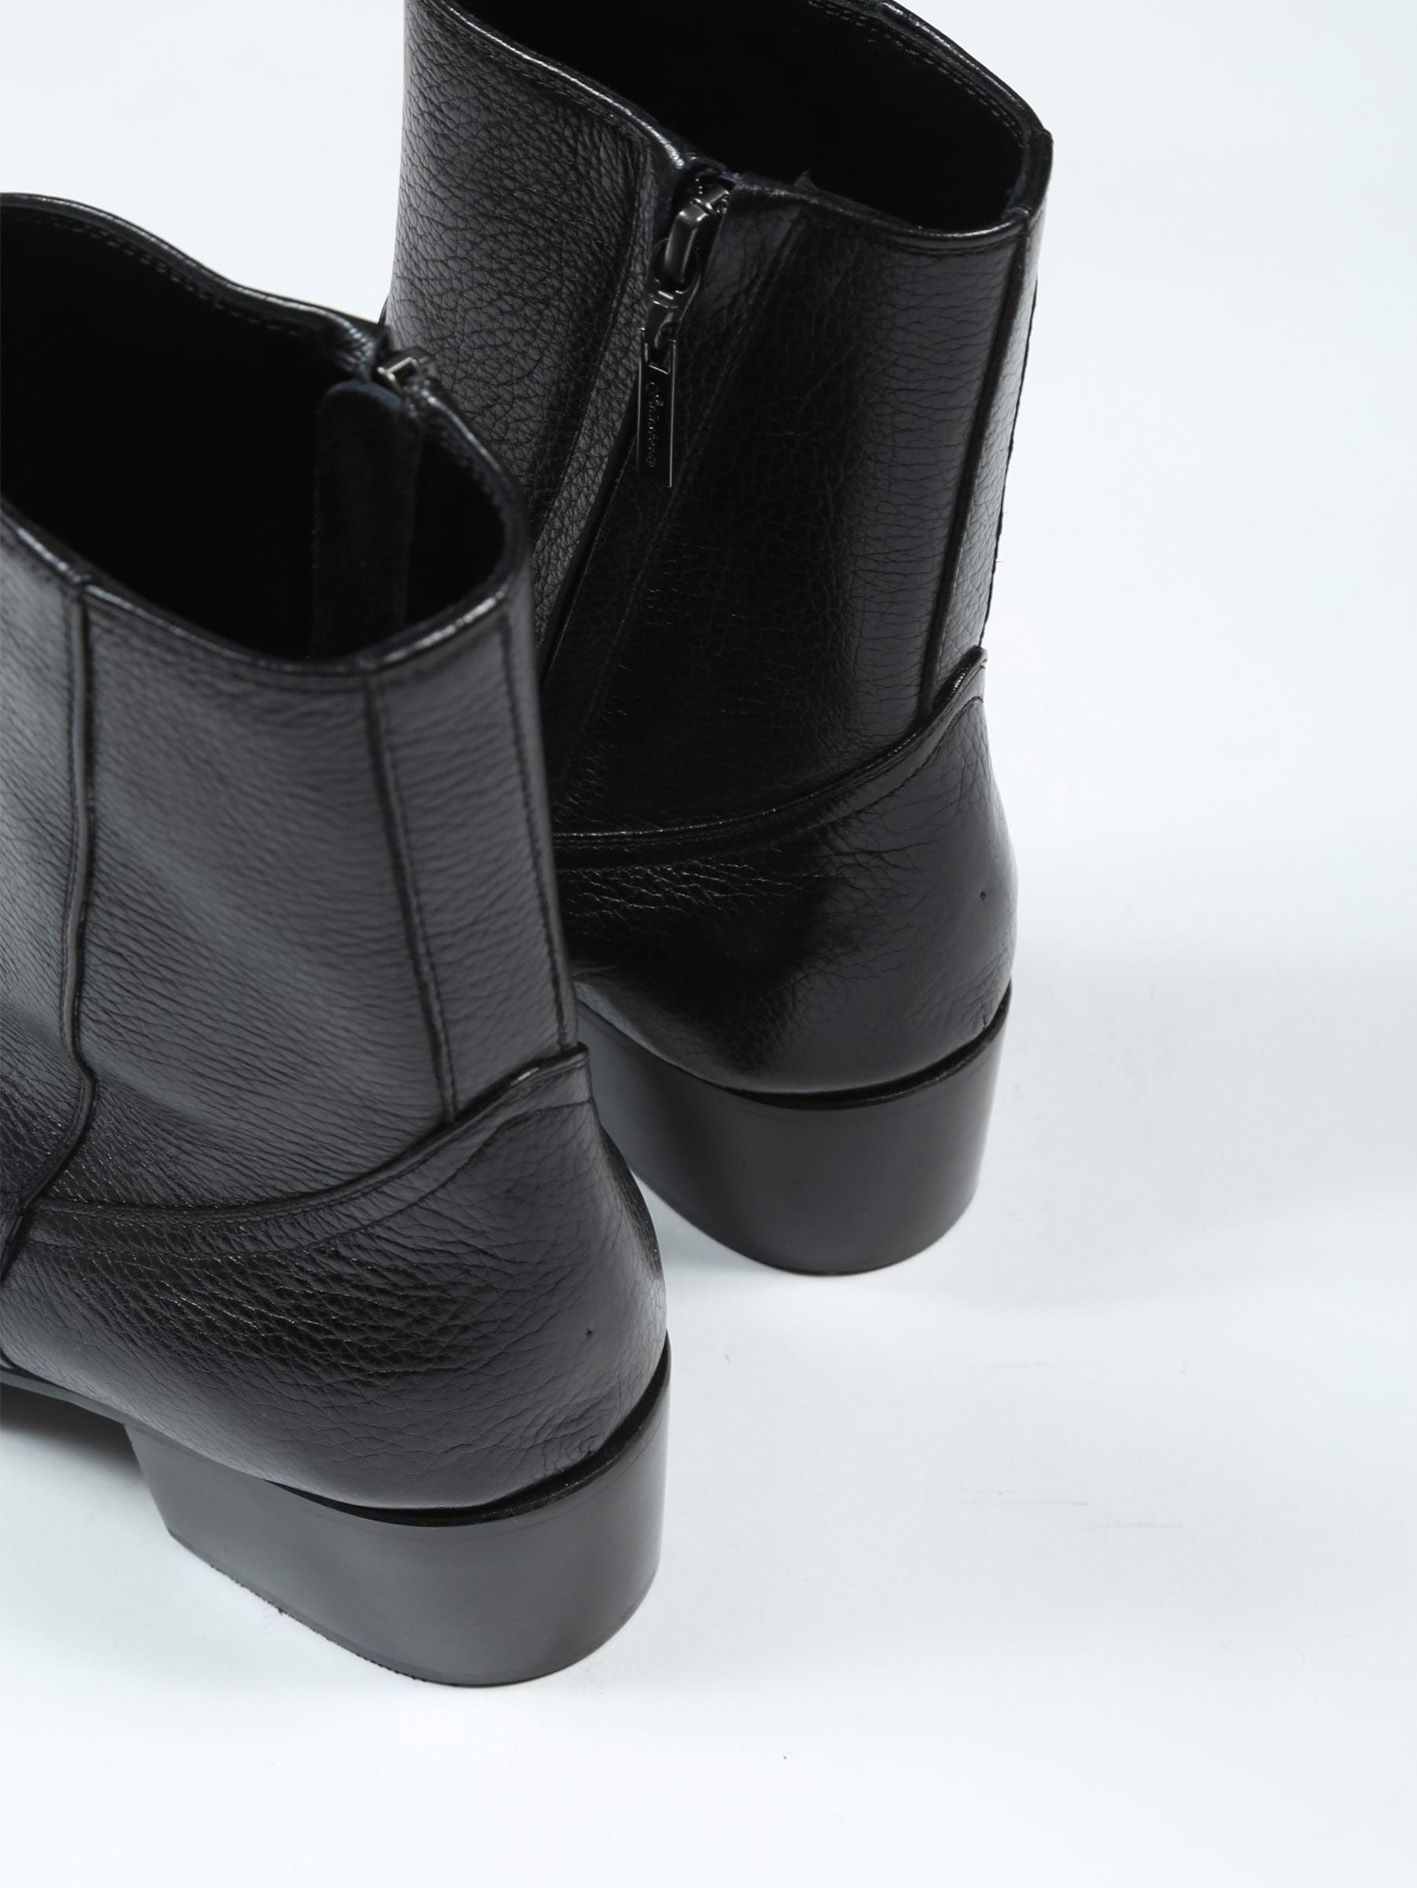 GalaabenD - エンボス 5cm ヒールブーツ - Emboss Heel Boots - Black